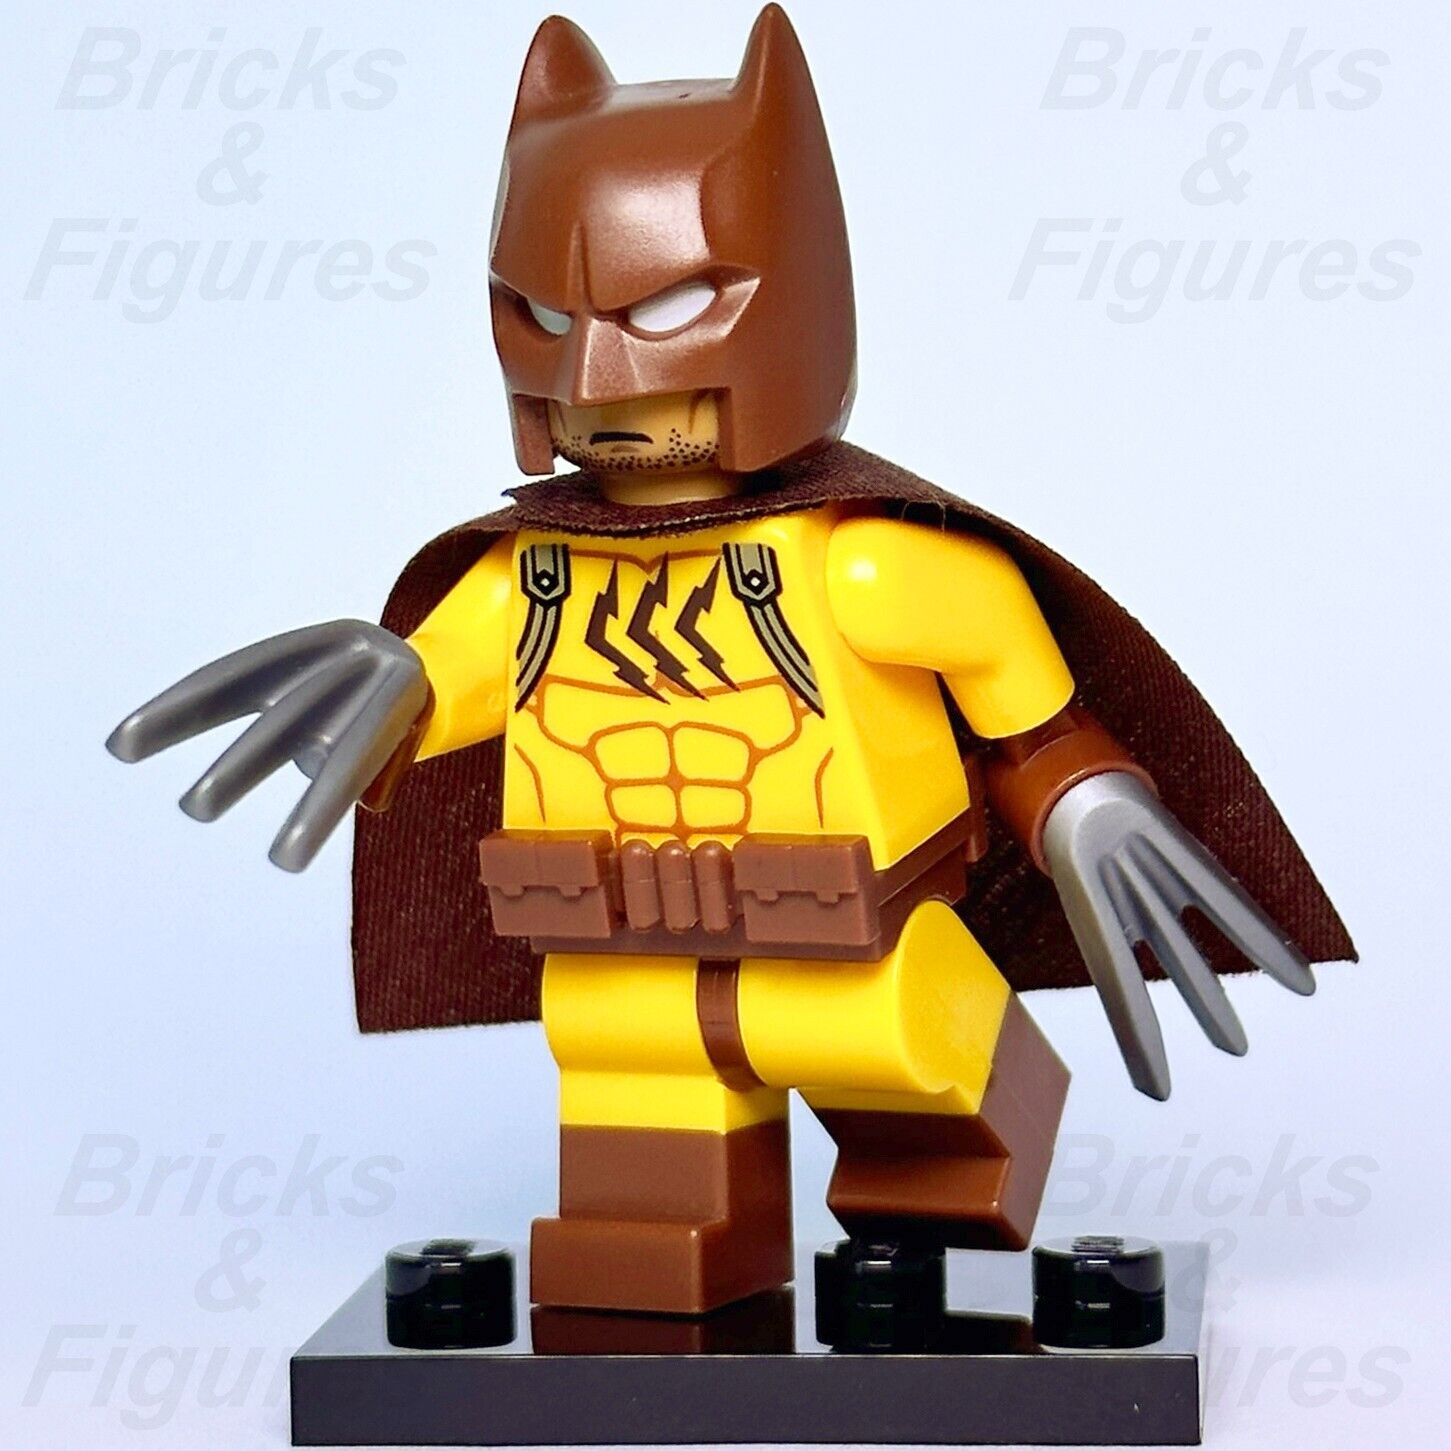 LEGO Catman The Batman Movie DC Super Heroes Minifigure 71017 Collectible New - Bricks & Figures